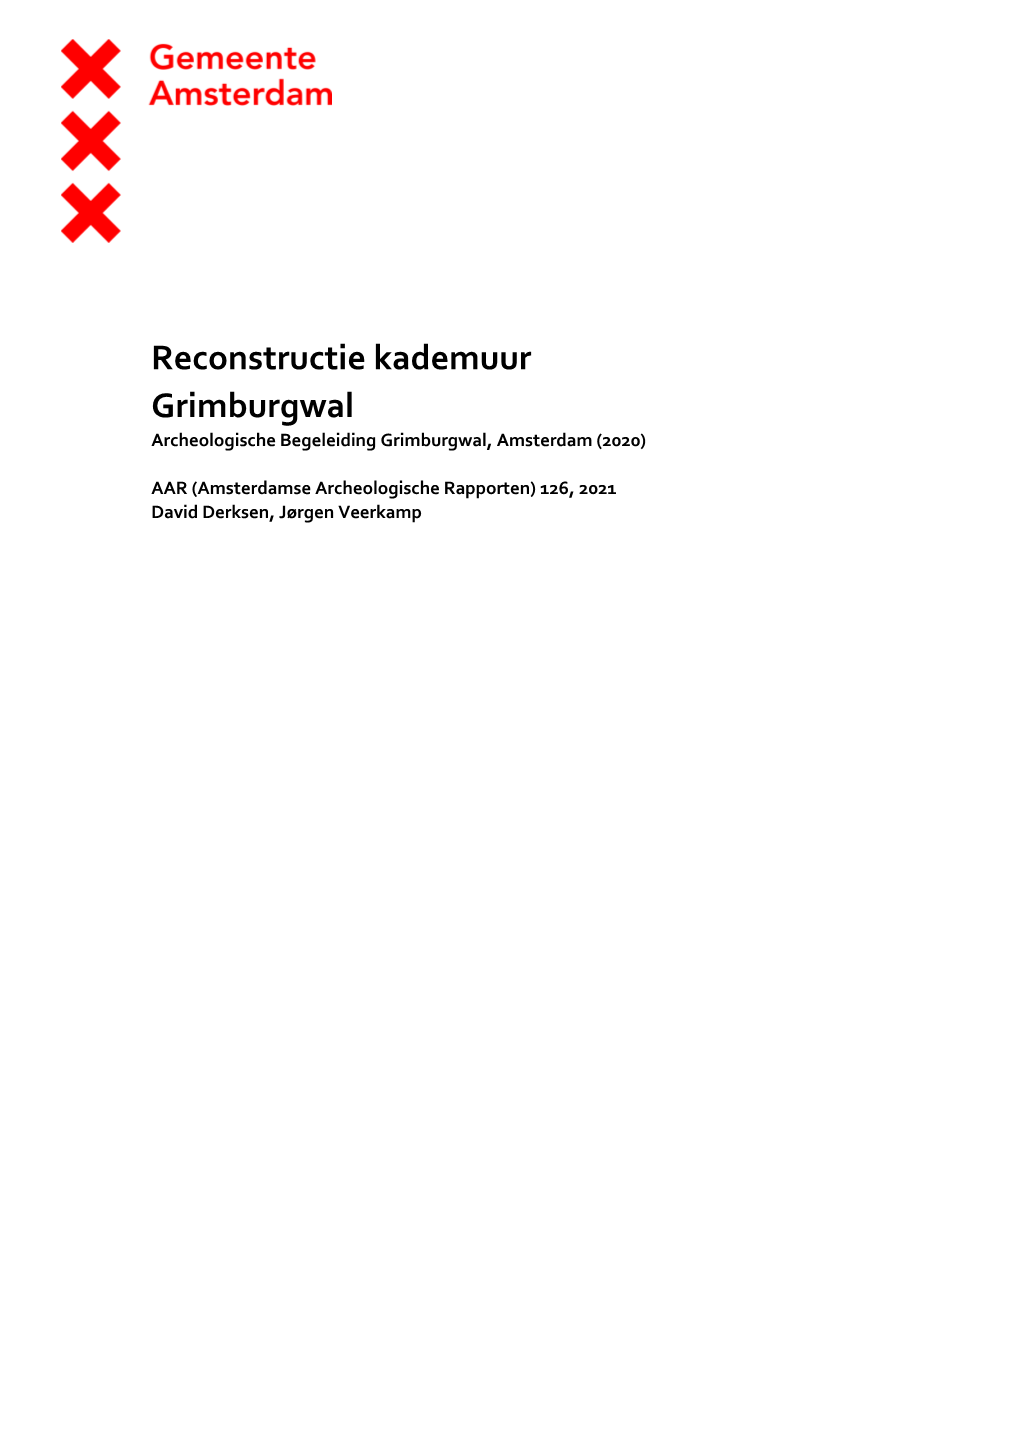 Reconstructie Kademuur Grimburgwal Archeologische Begeleiding Grimburgwal, Amsterdam (2020)